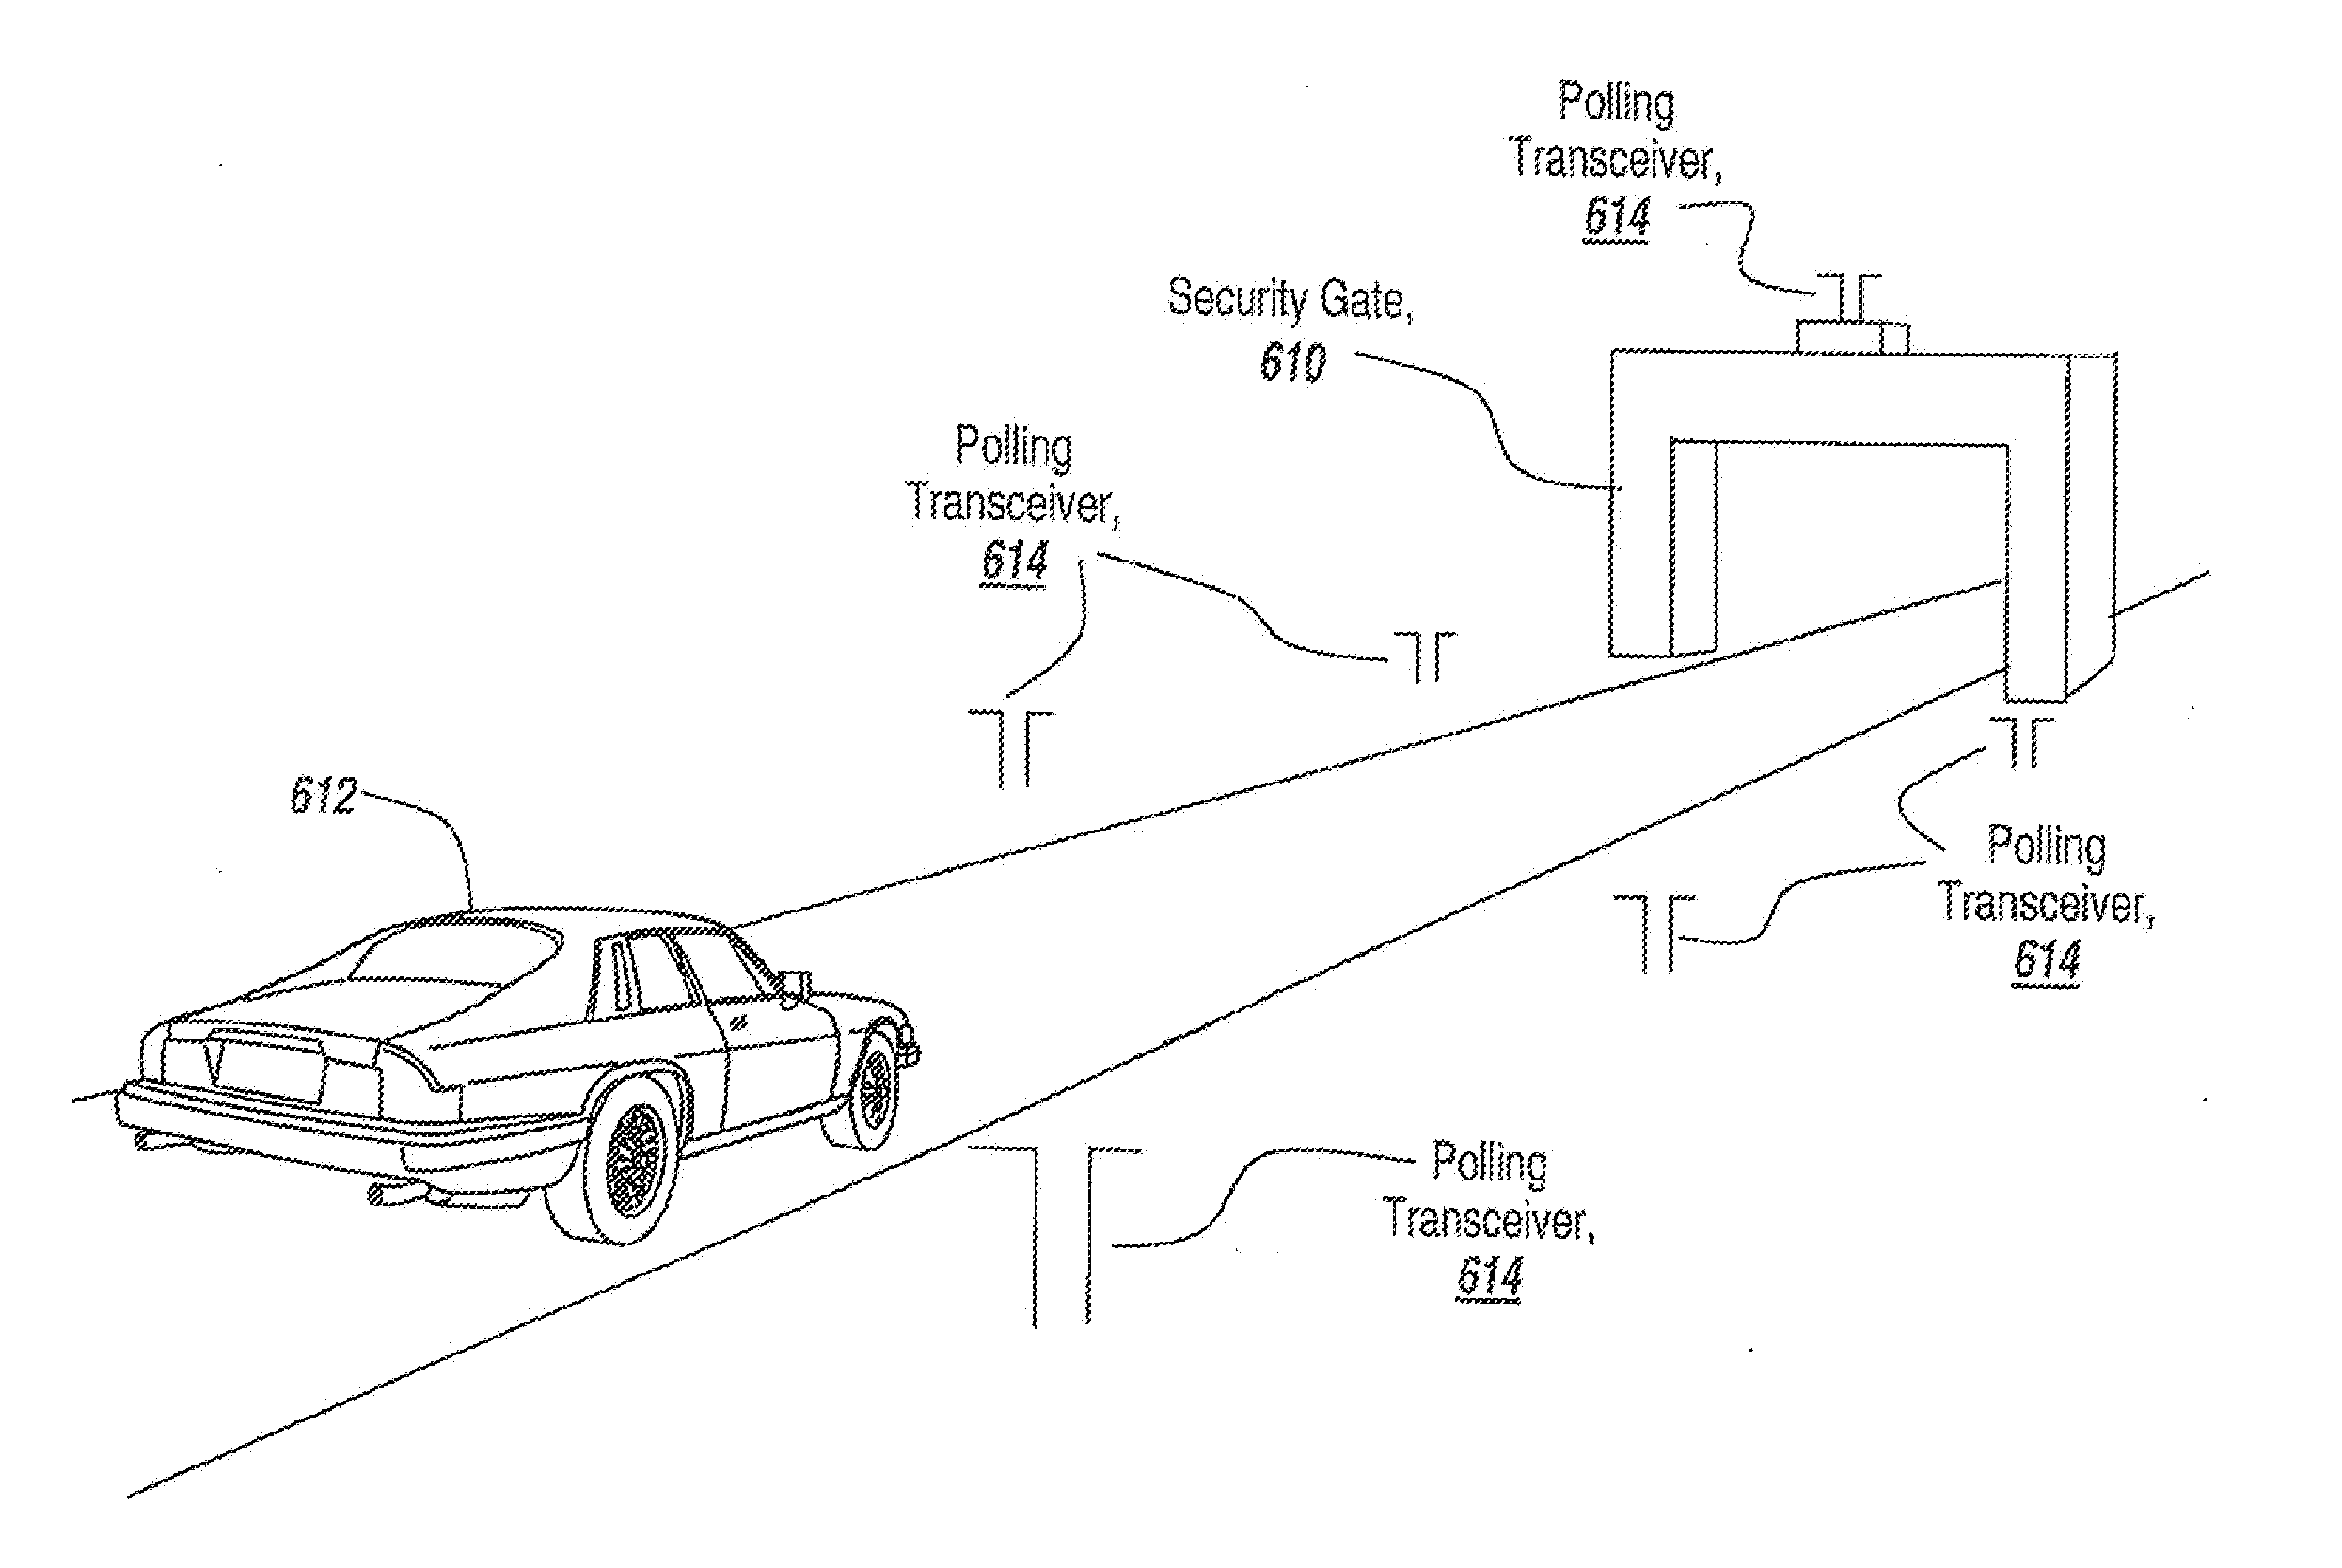 Method of tracking a vehicle using microradios